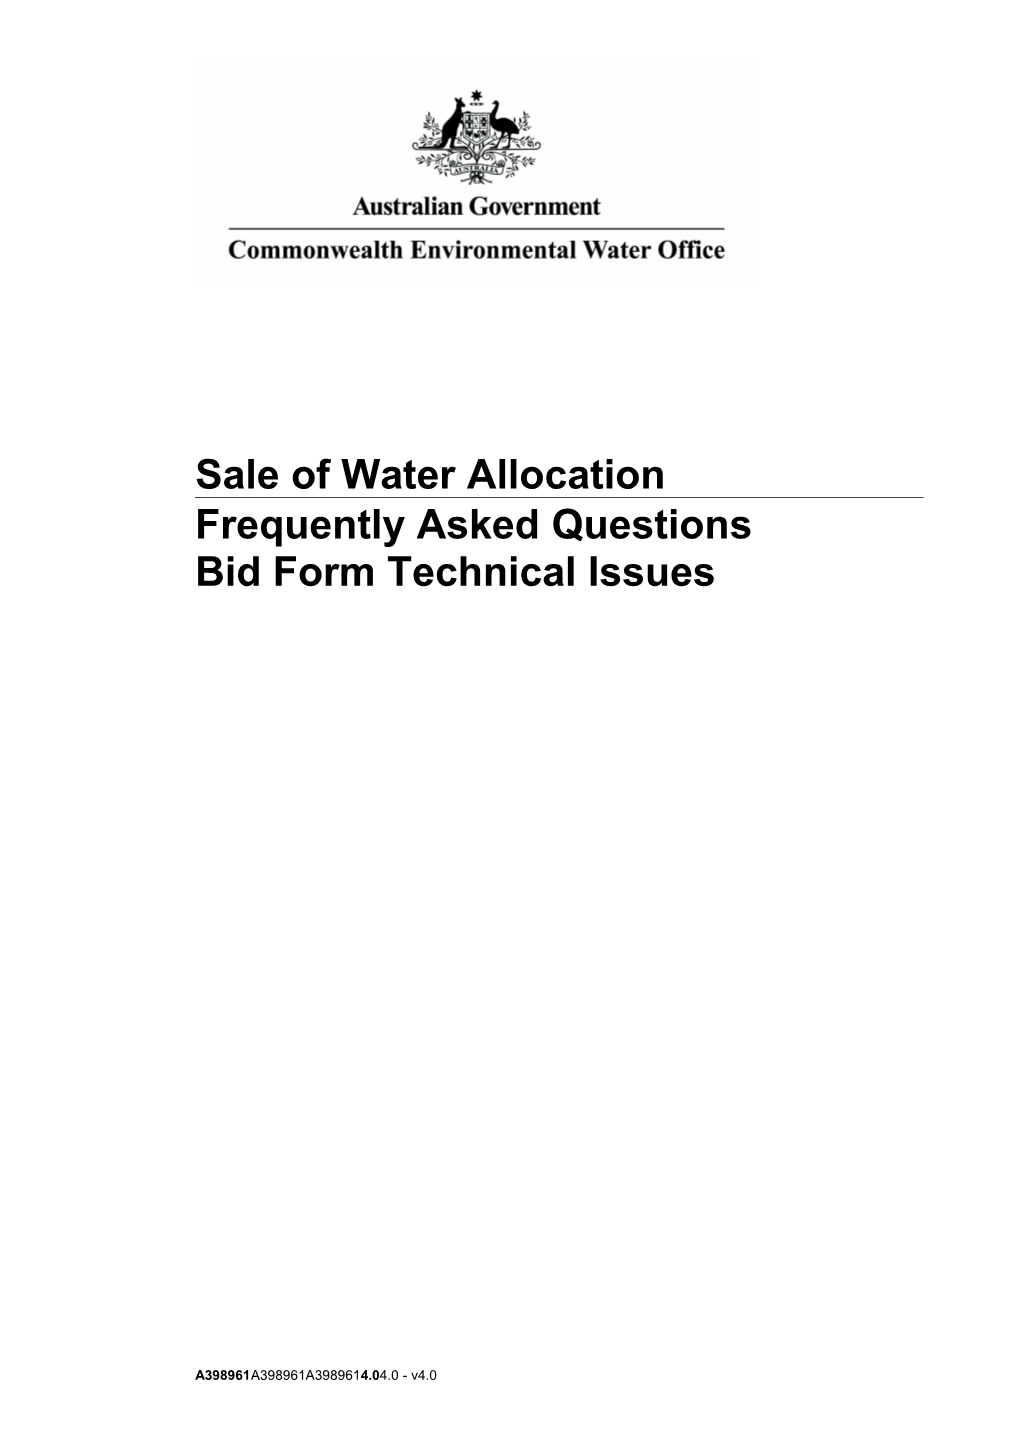 Sale of Water Allocation - Bid Form Technical FAQ